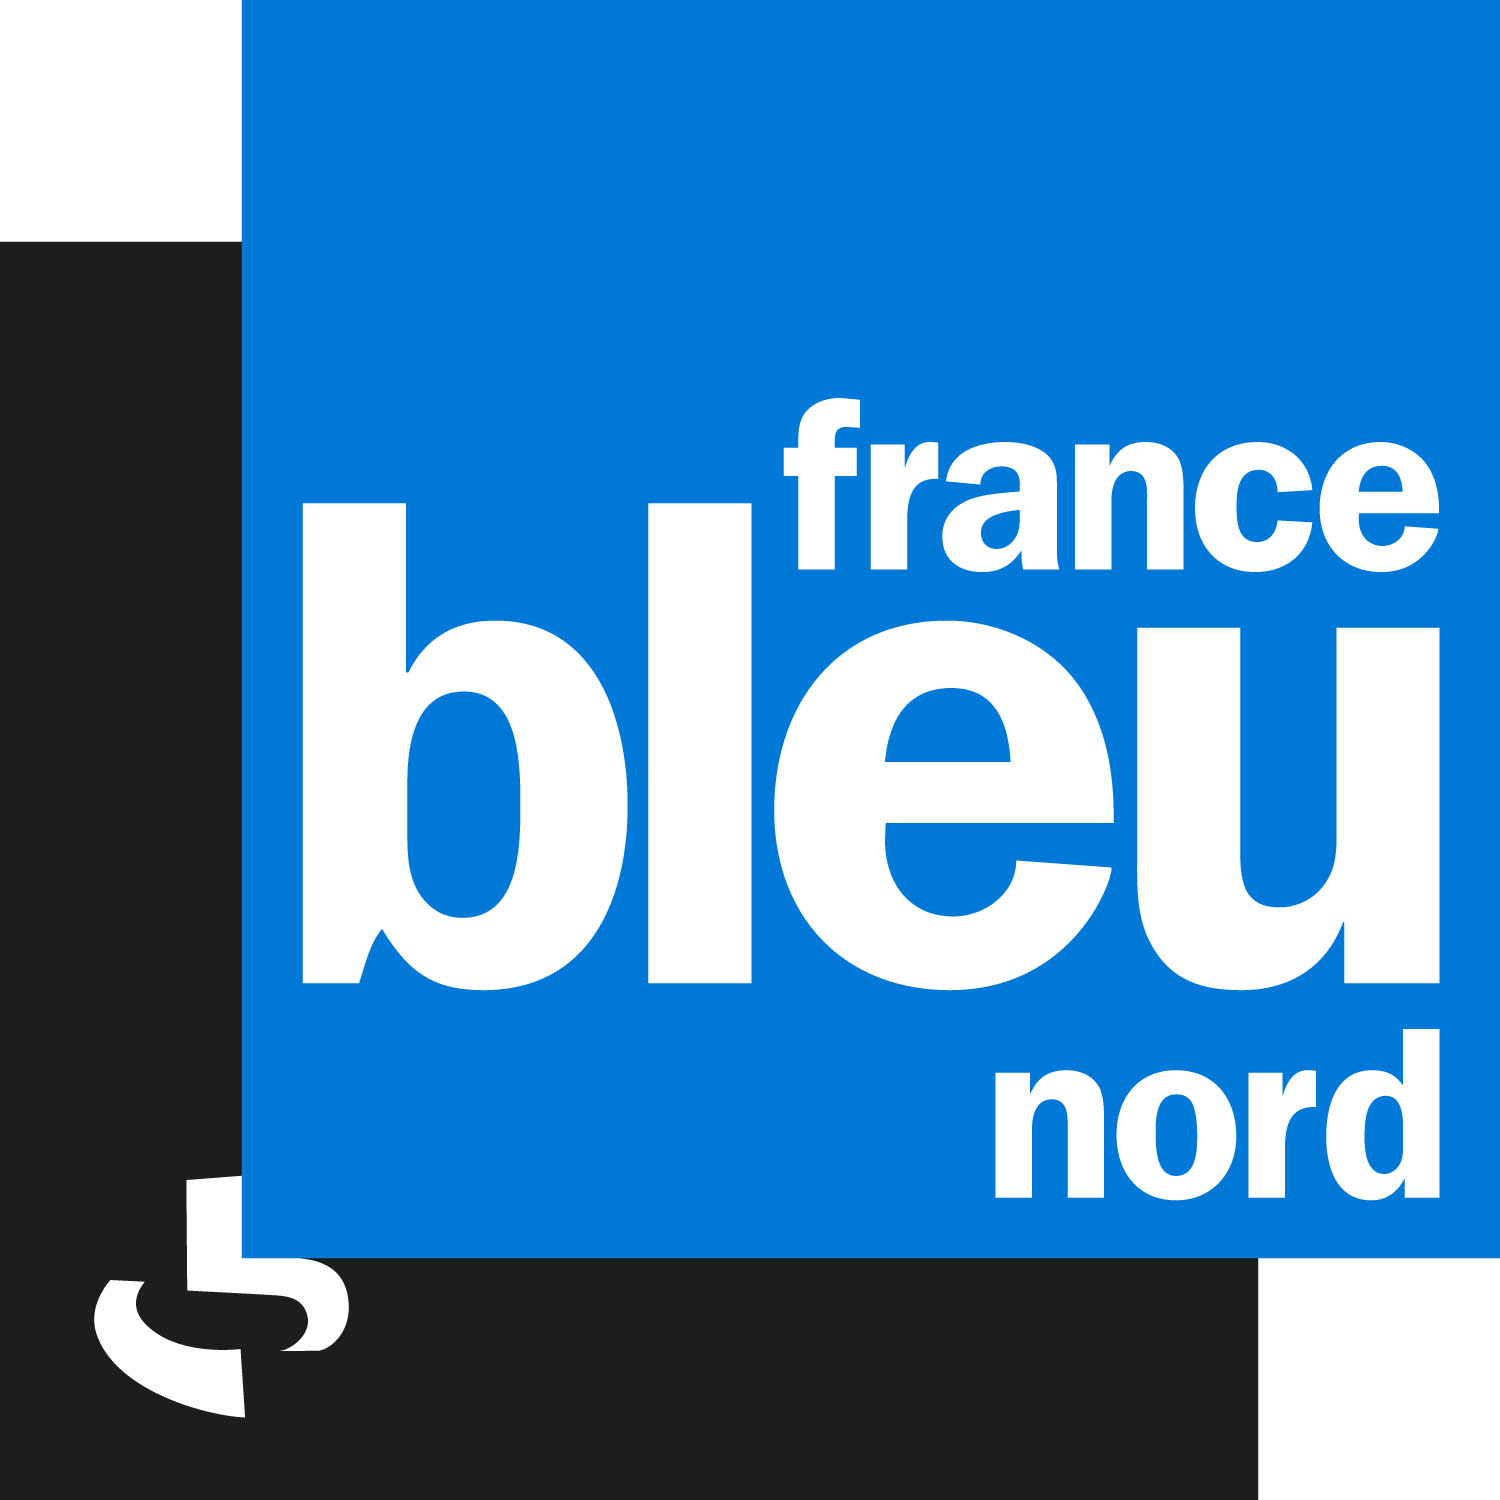 Radio France Bleu Nord